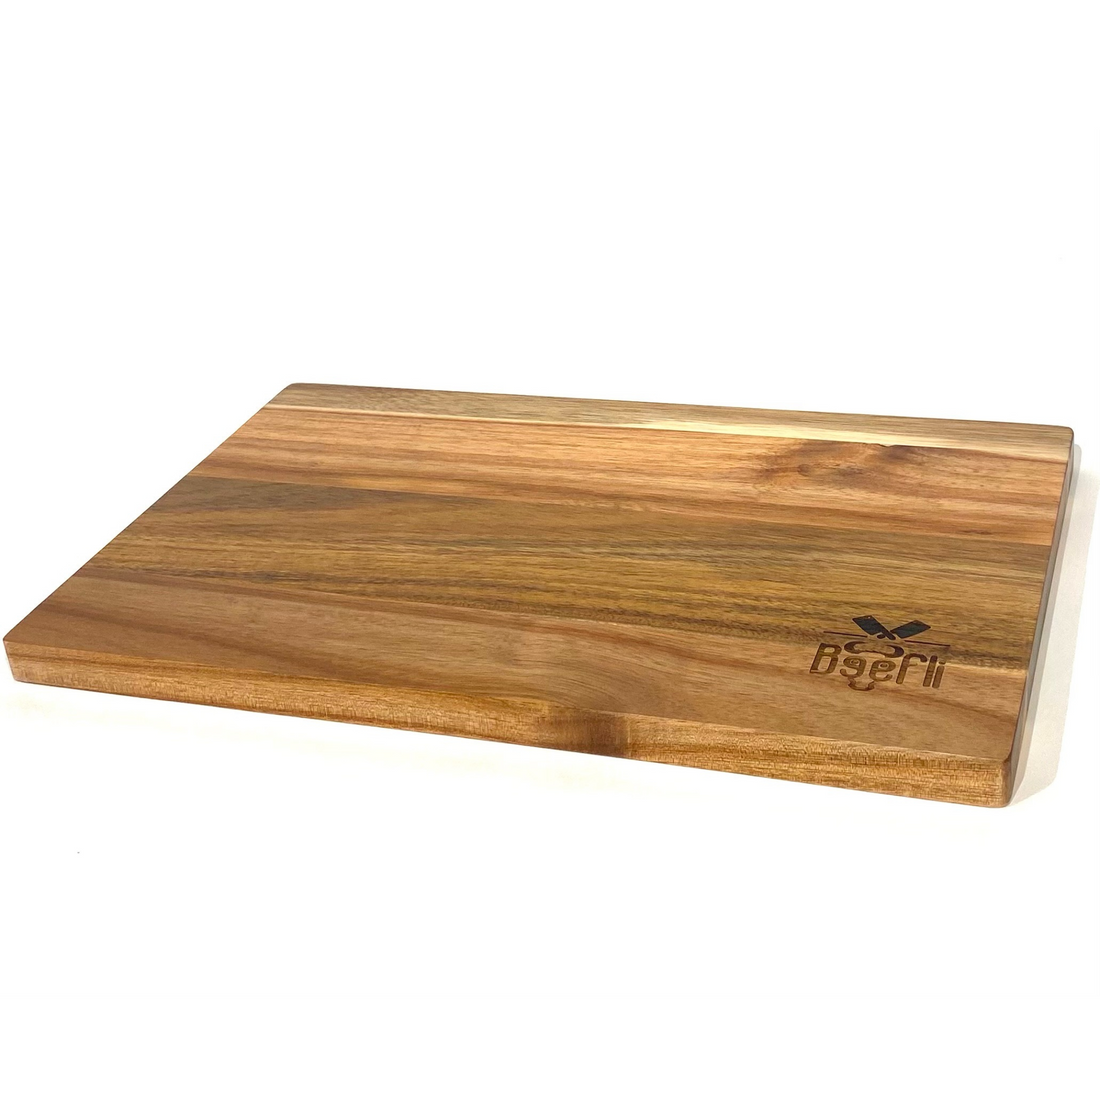 Beefly Acacia Wood Cutting Board